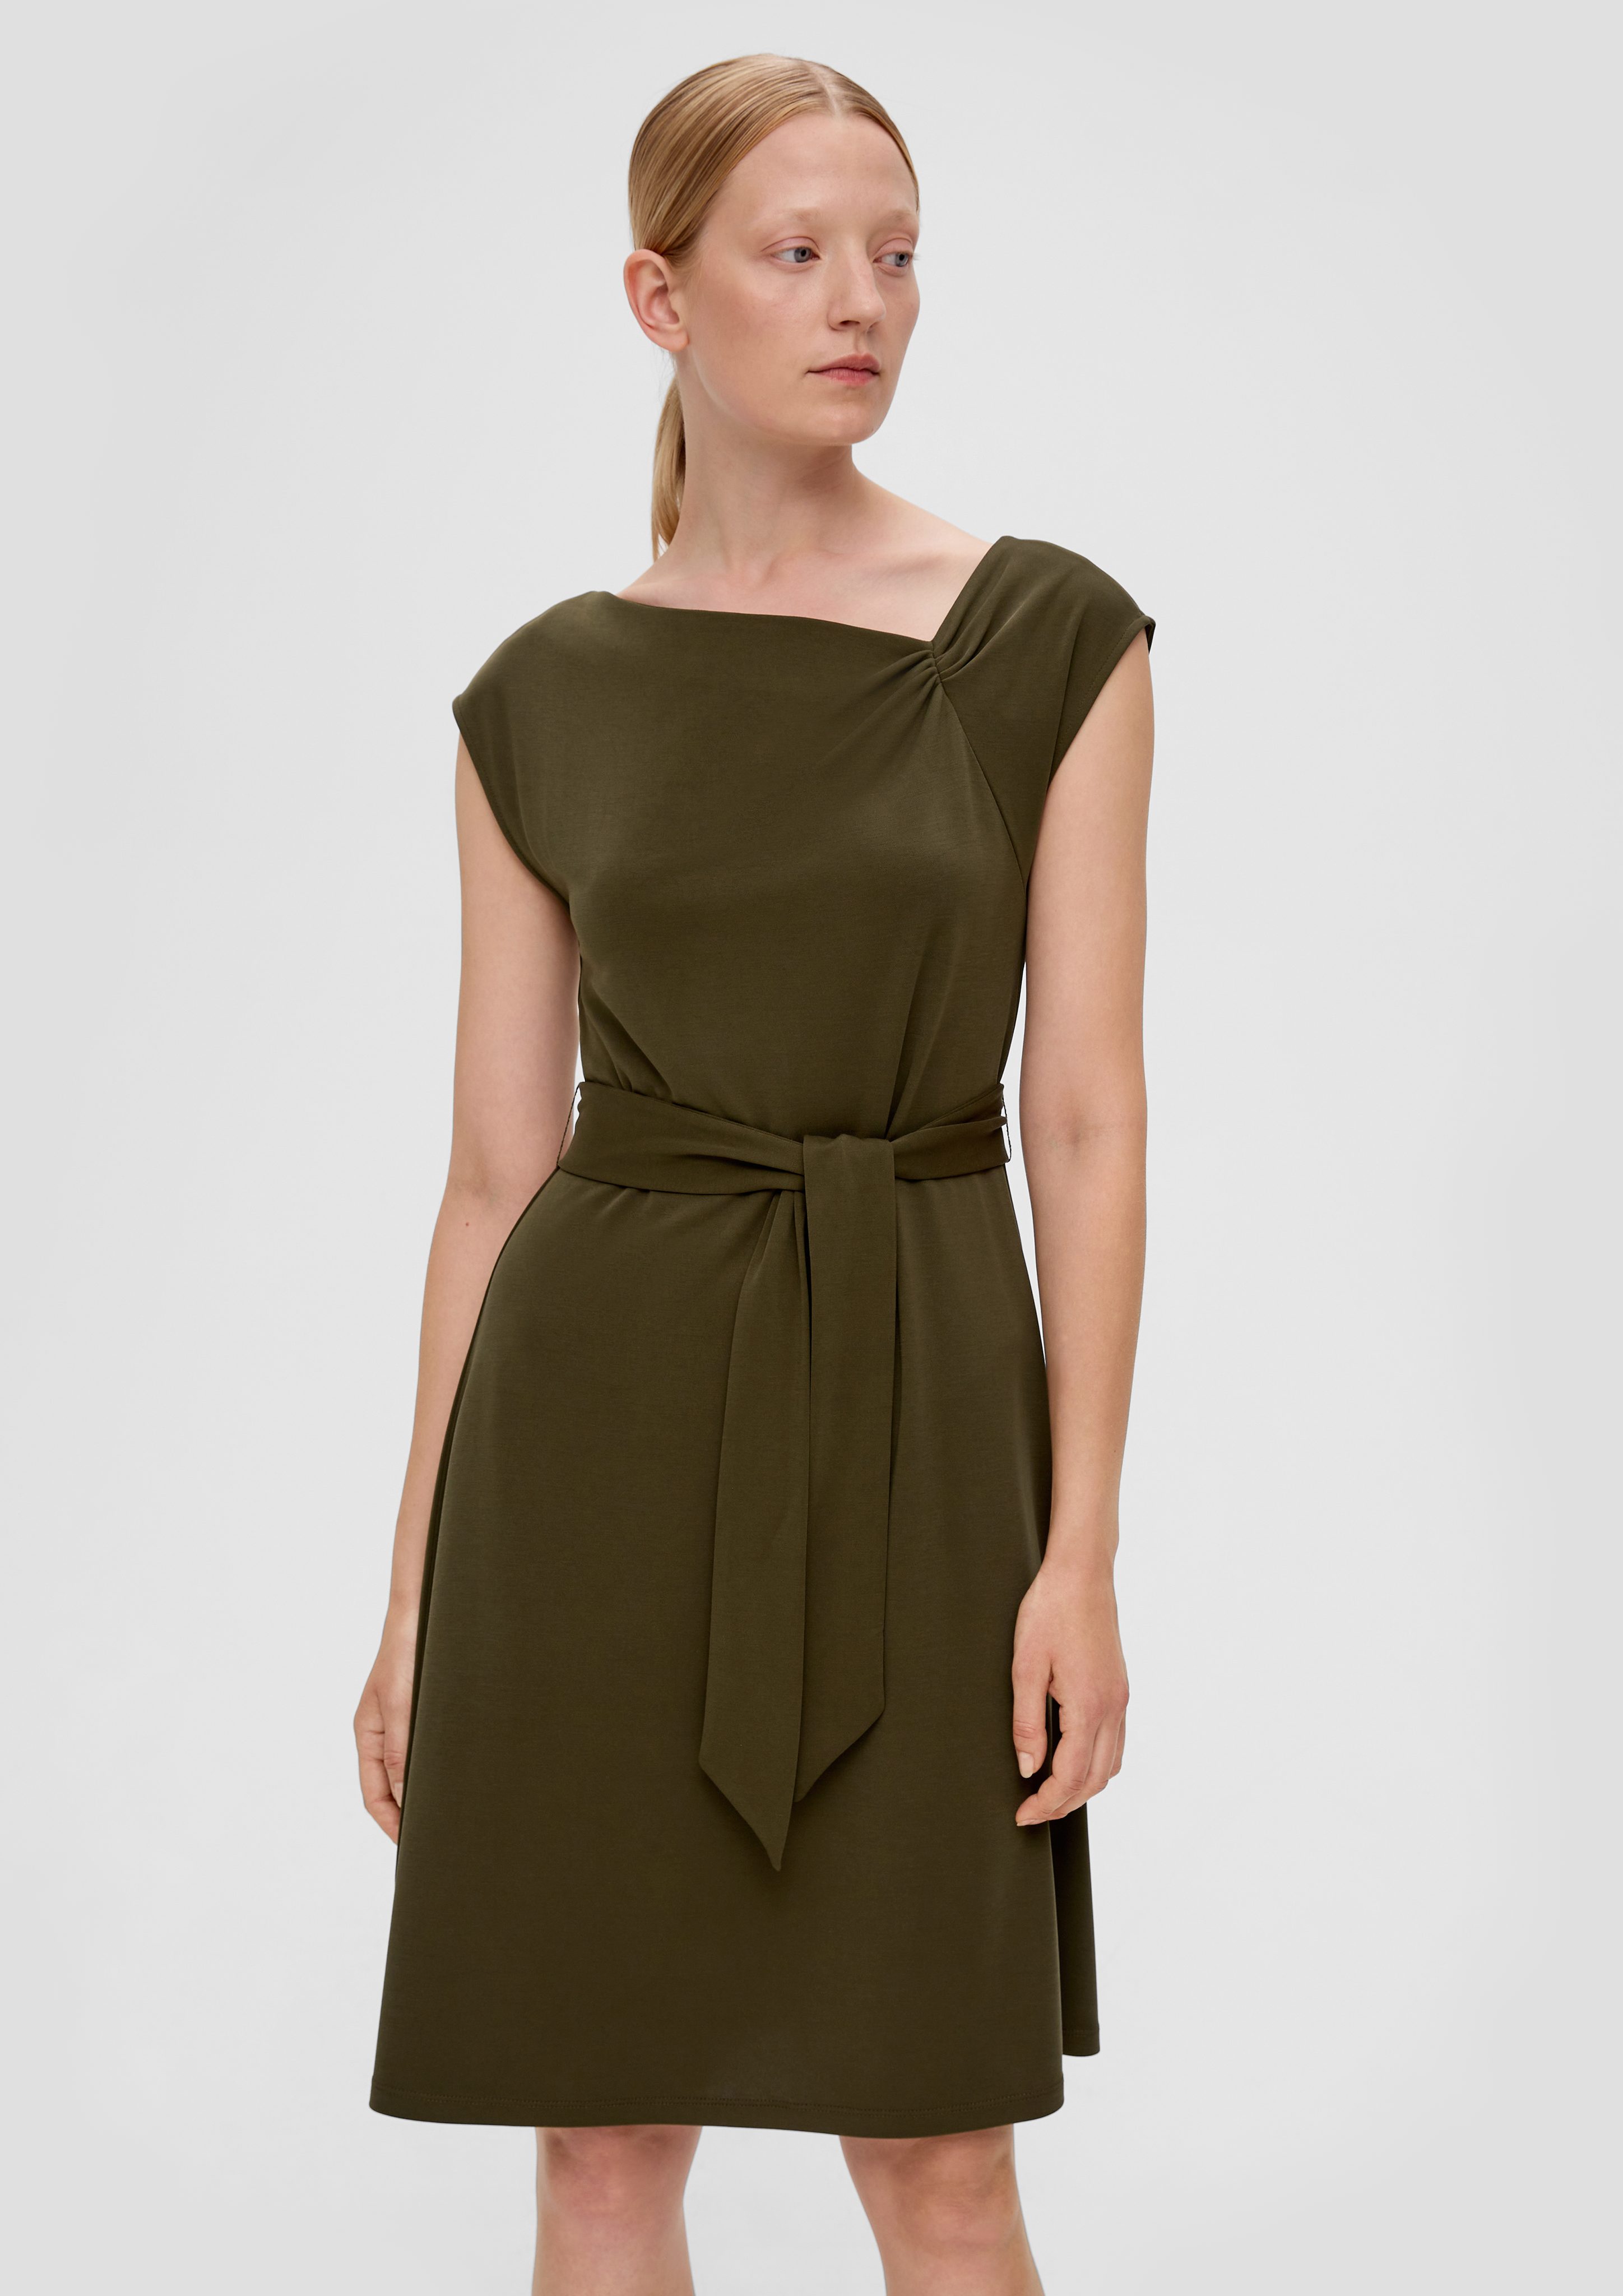 s.Oliver BLACK LABEL Minikleid Kurzes Kleid mit Knoten-Detail Kontrast-Details olivgrün | Kleider